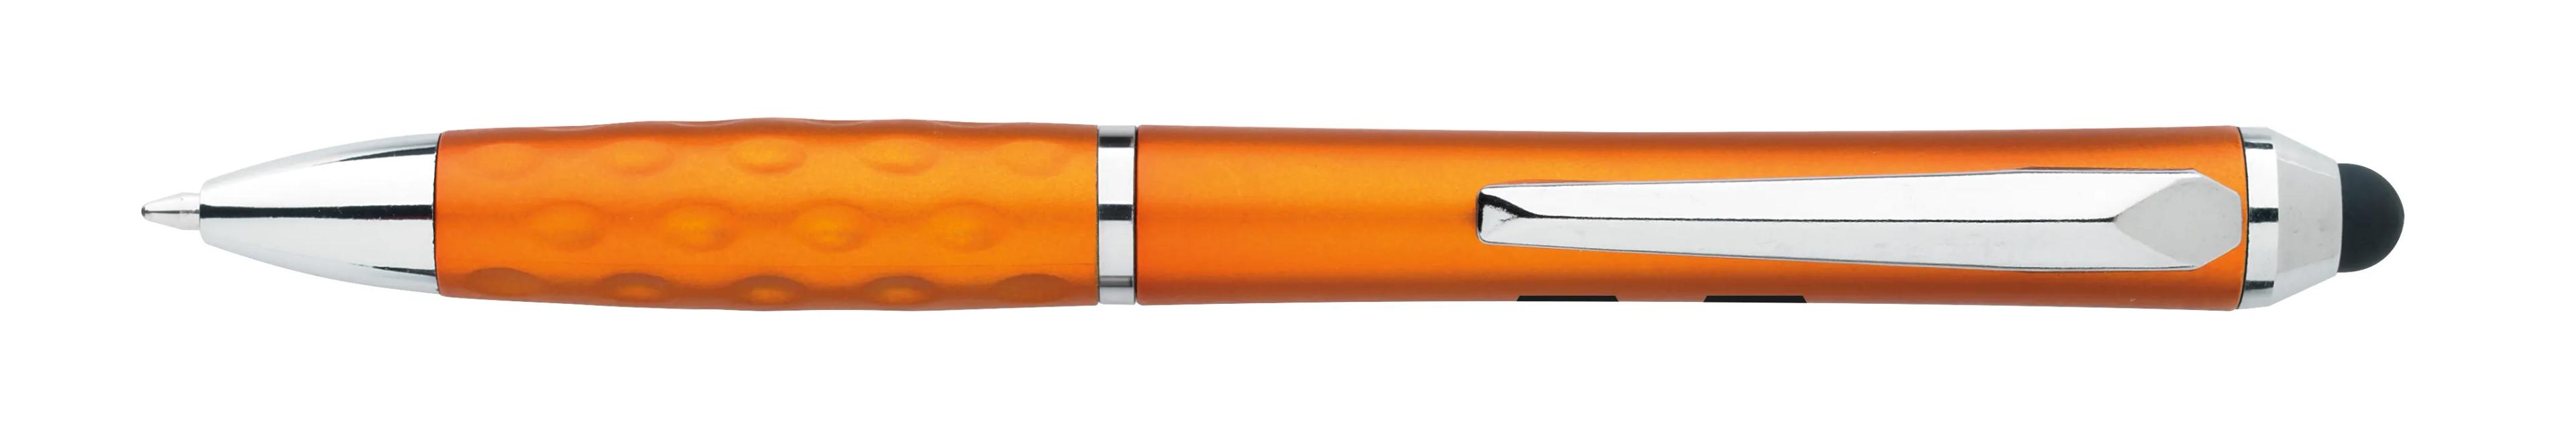 Tev Metallic Stylus Pen 63 of 77